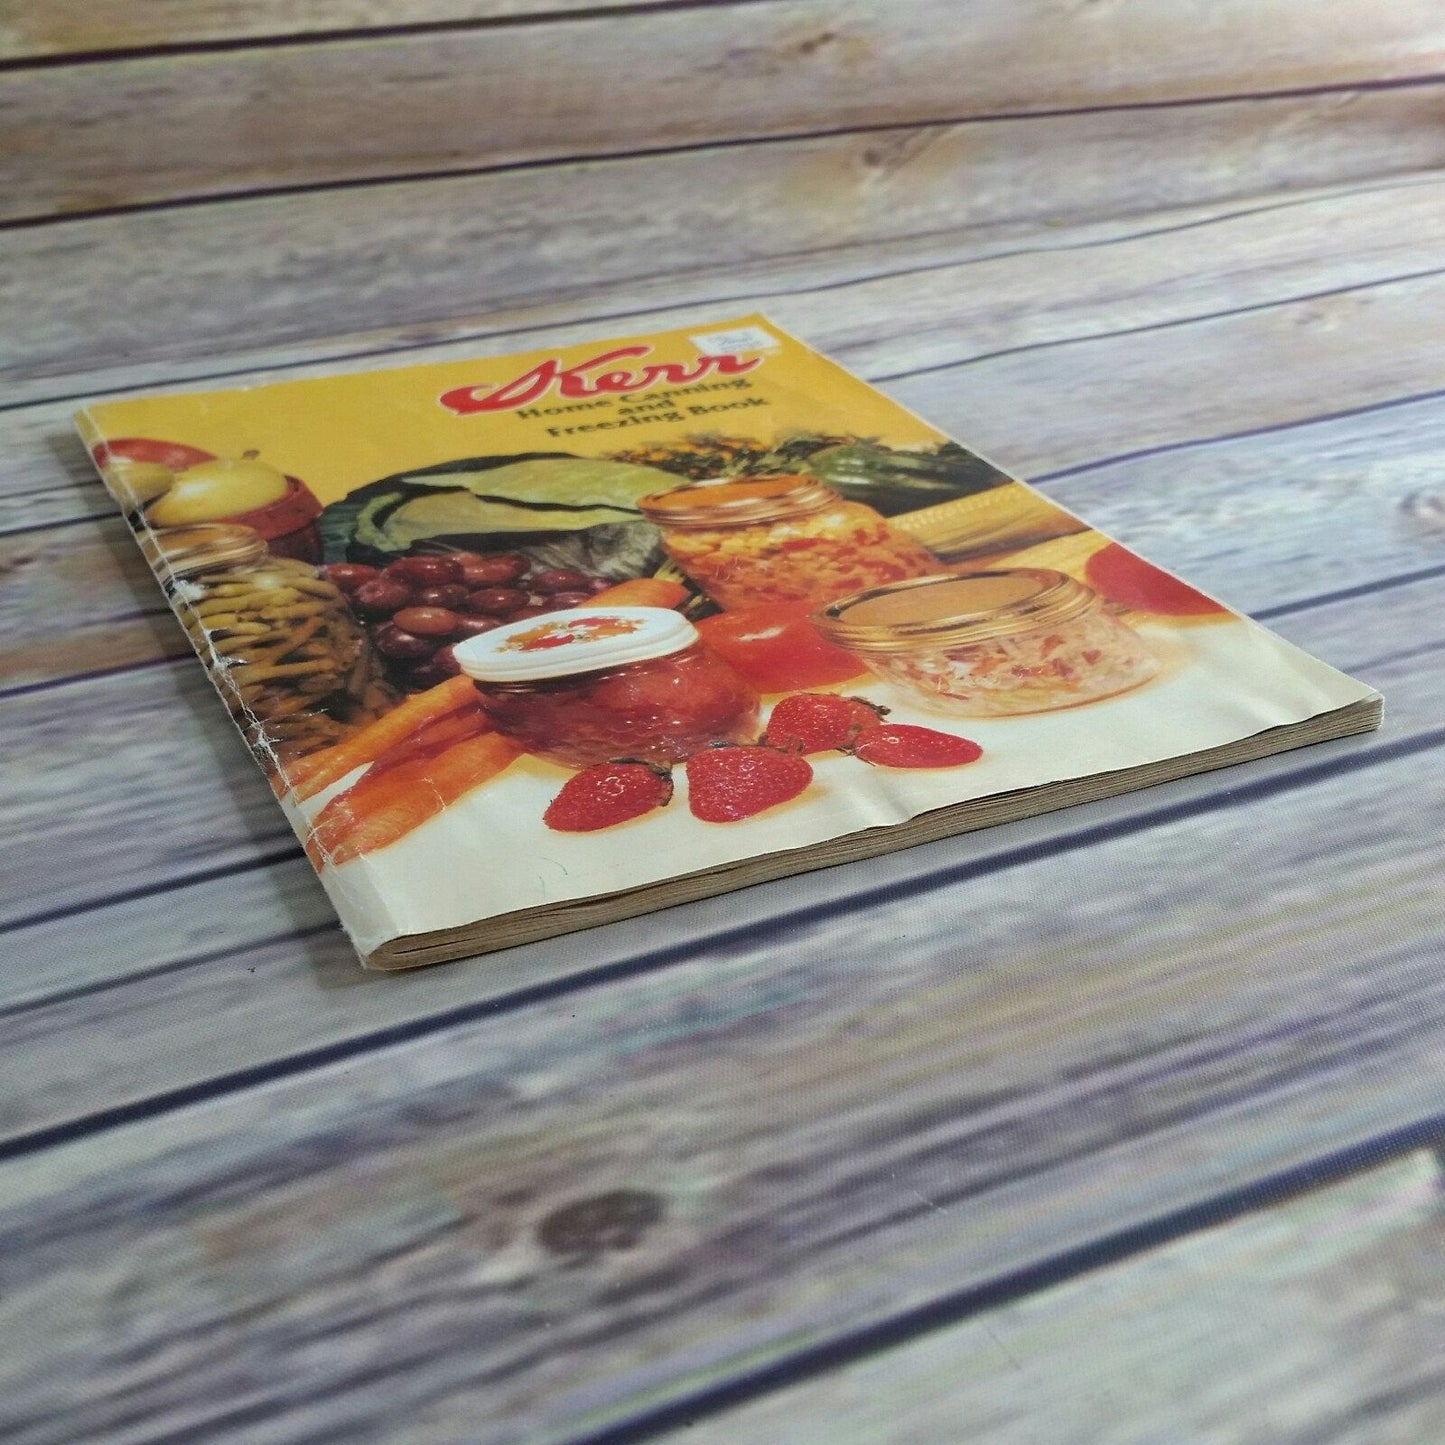 Vintage Kerr Home Canning and Freezing Cookbook Recipes Booklet 1983 Paperback